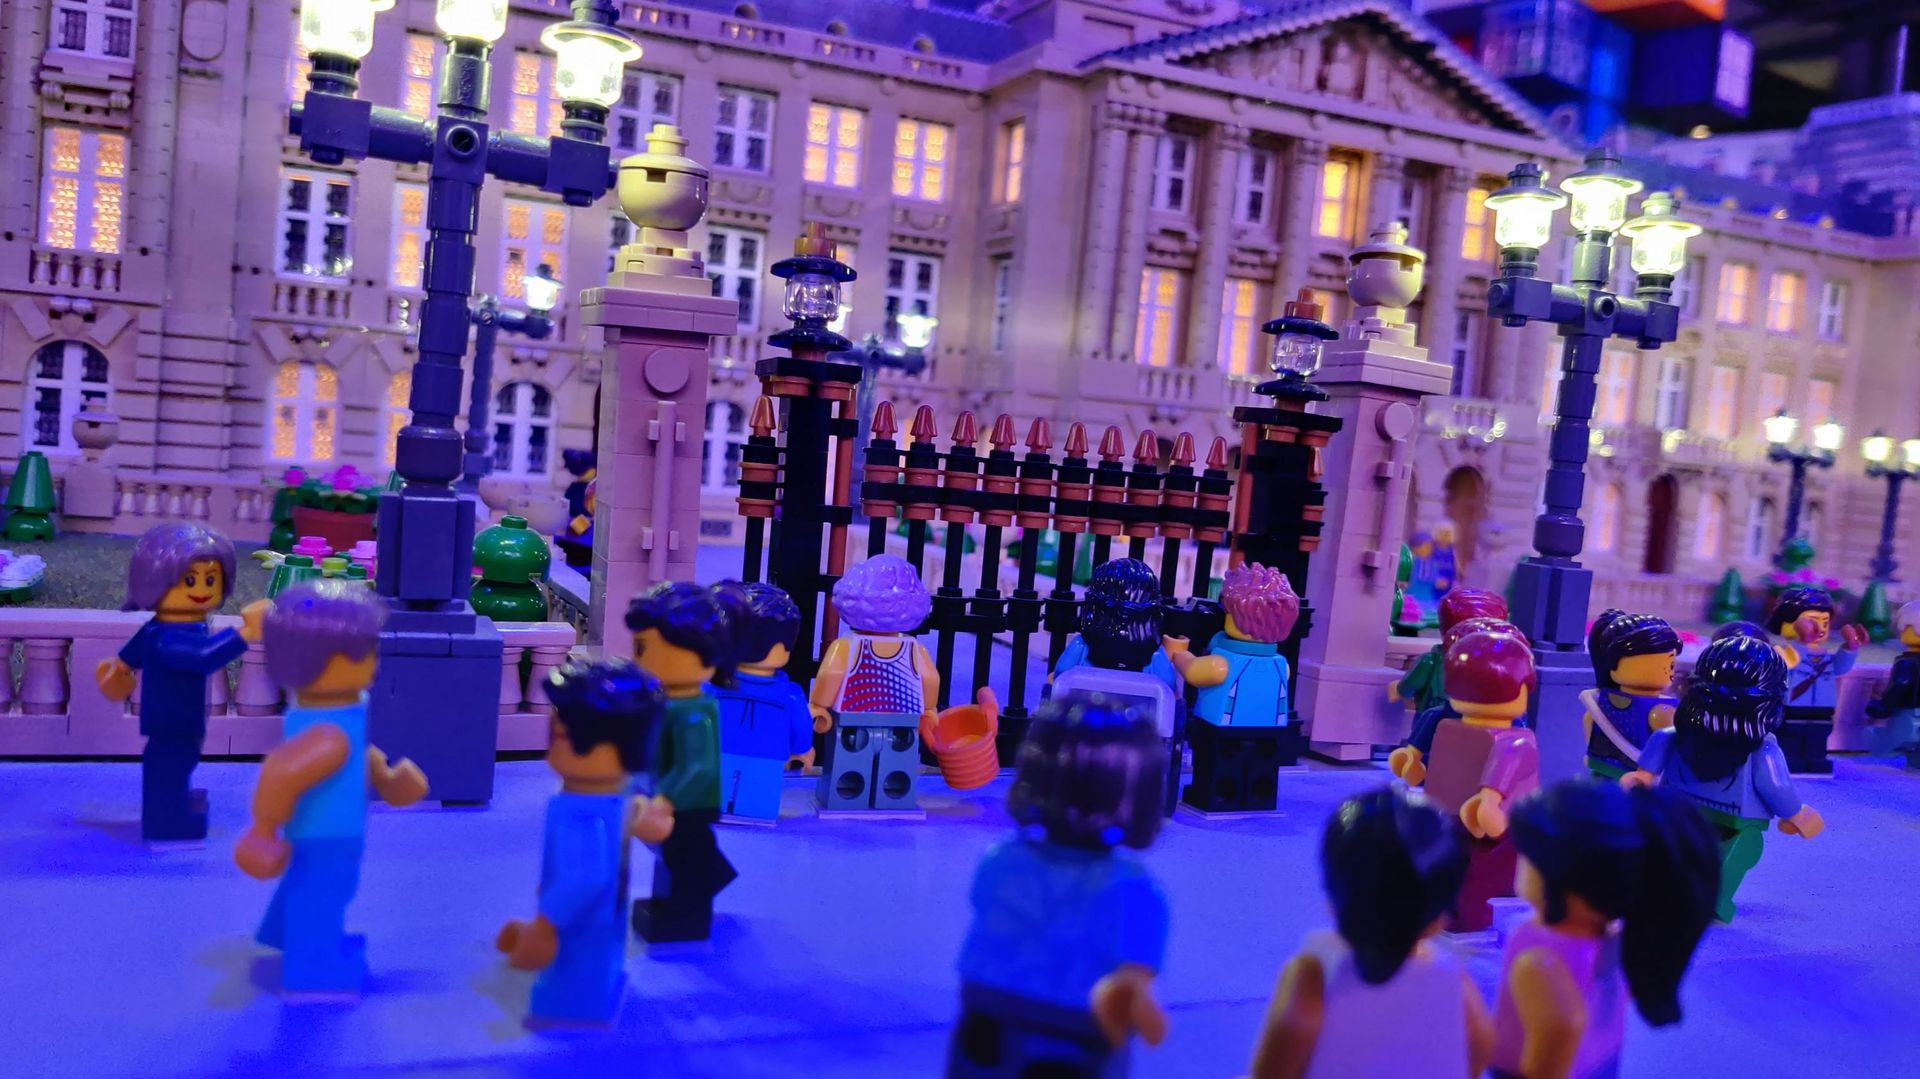 Le palais royal, version LEGO.